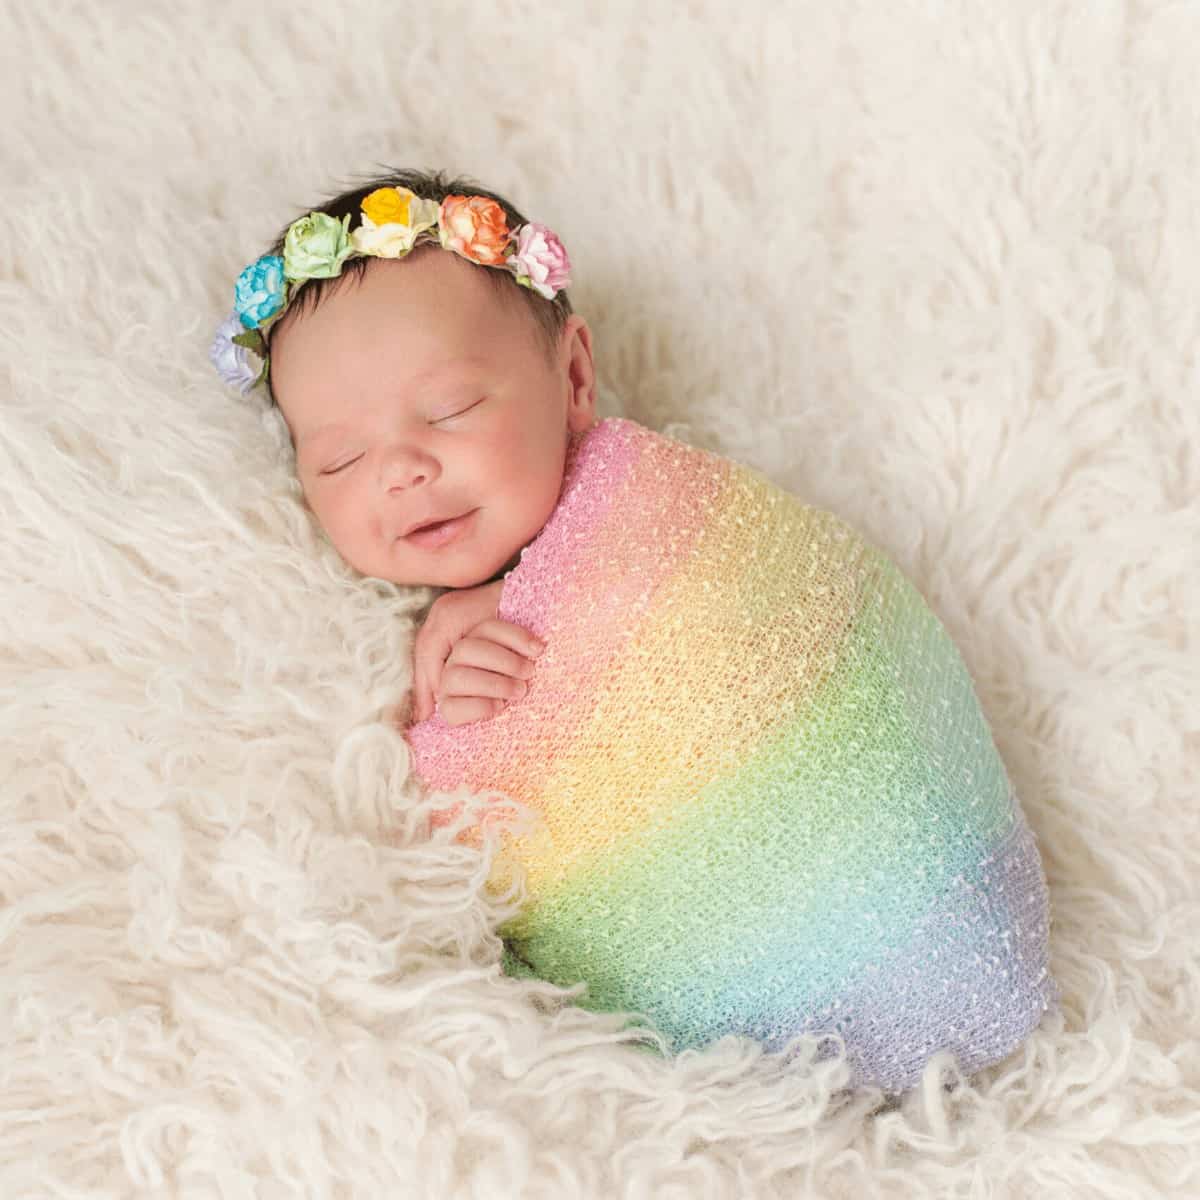 Baby grow vest bodysuit fertility treatment special rainbow gift shower present